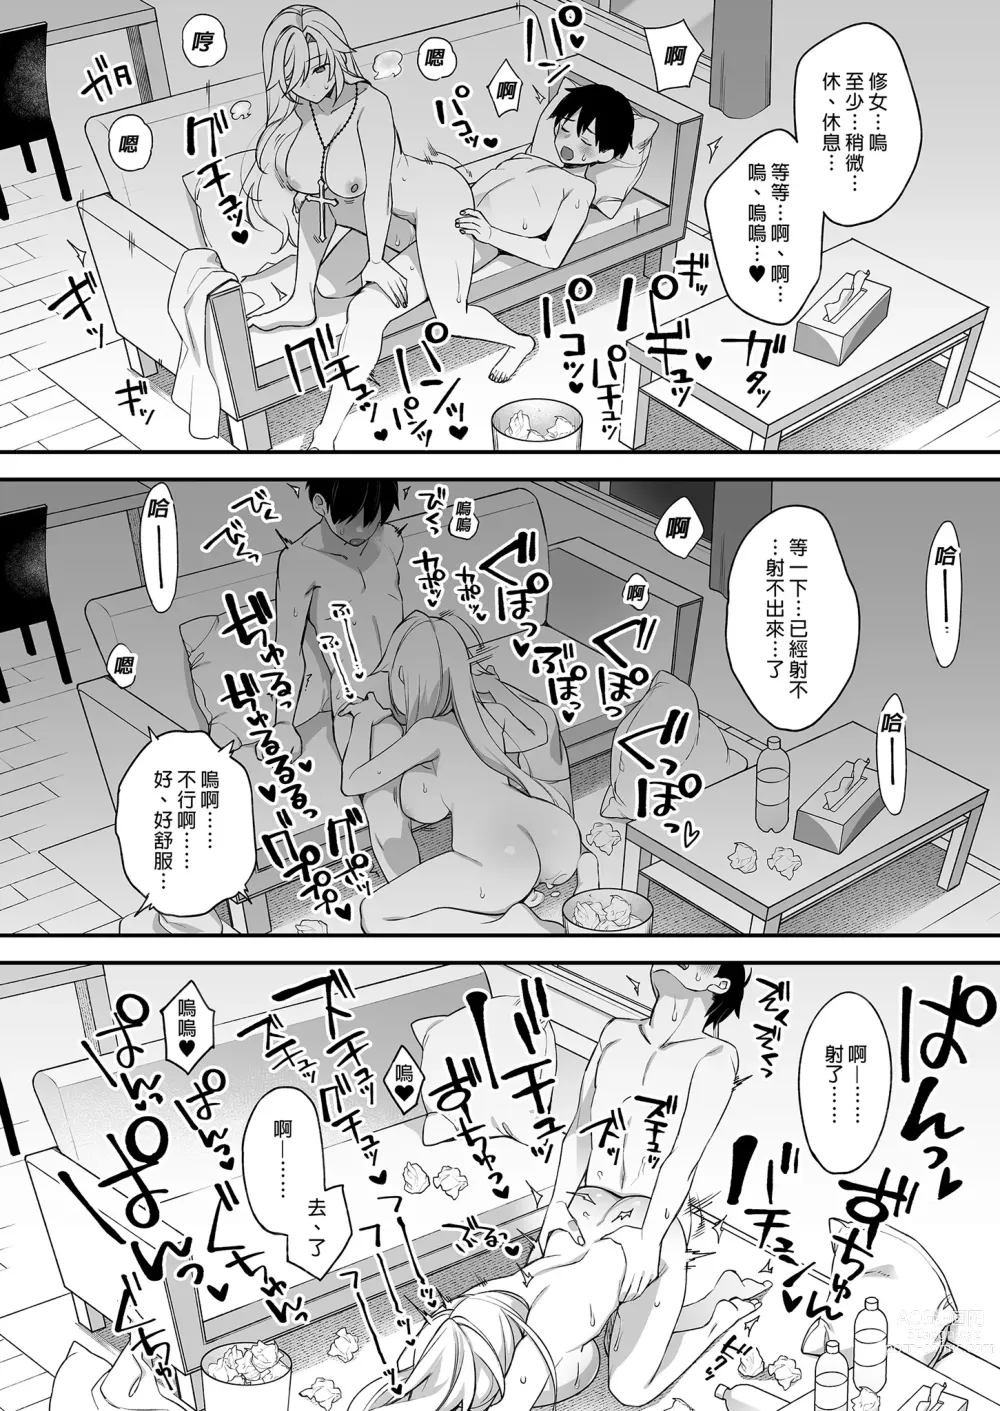 Page 47 of manga Hypnosis 2 (uncensored)